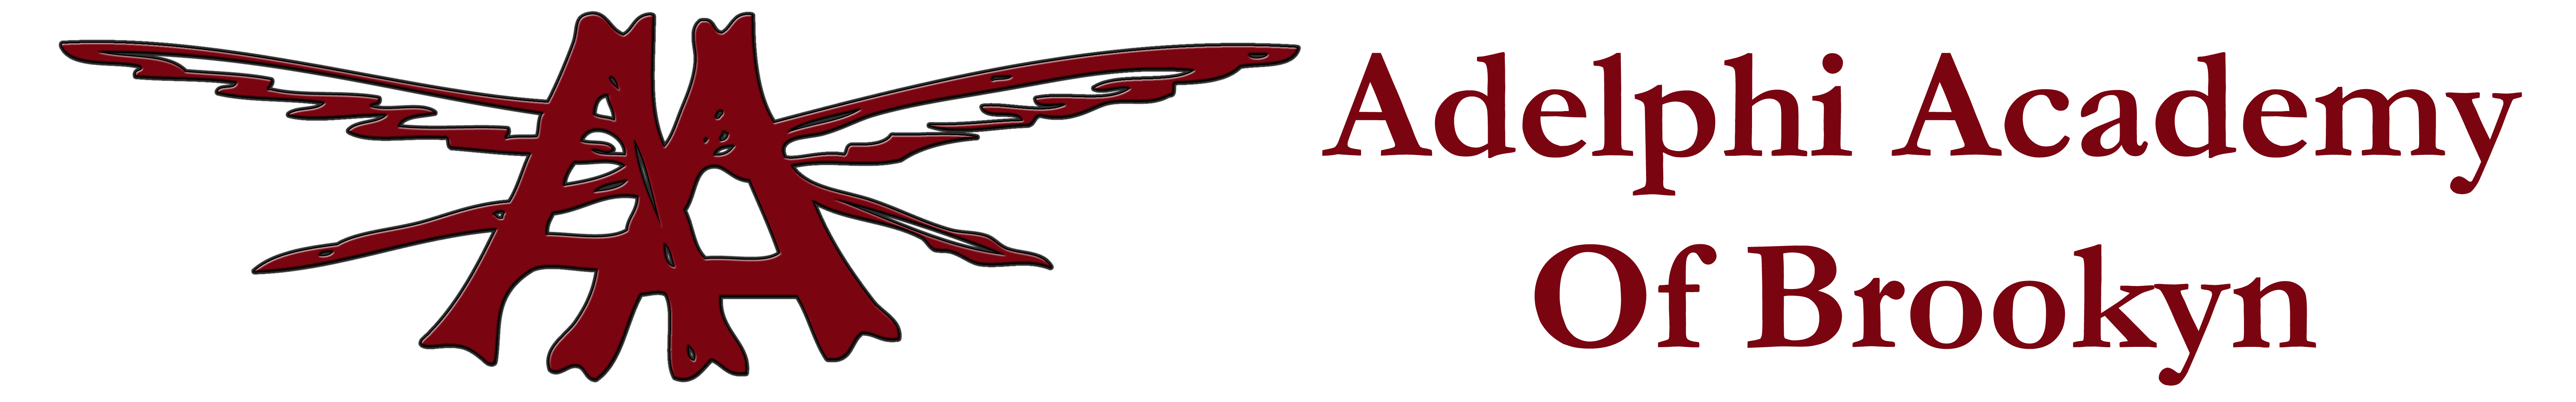 Quills Football Logo - Home - Adelphi Academy